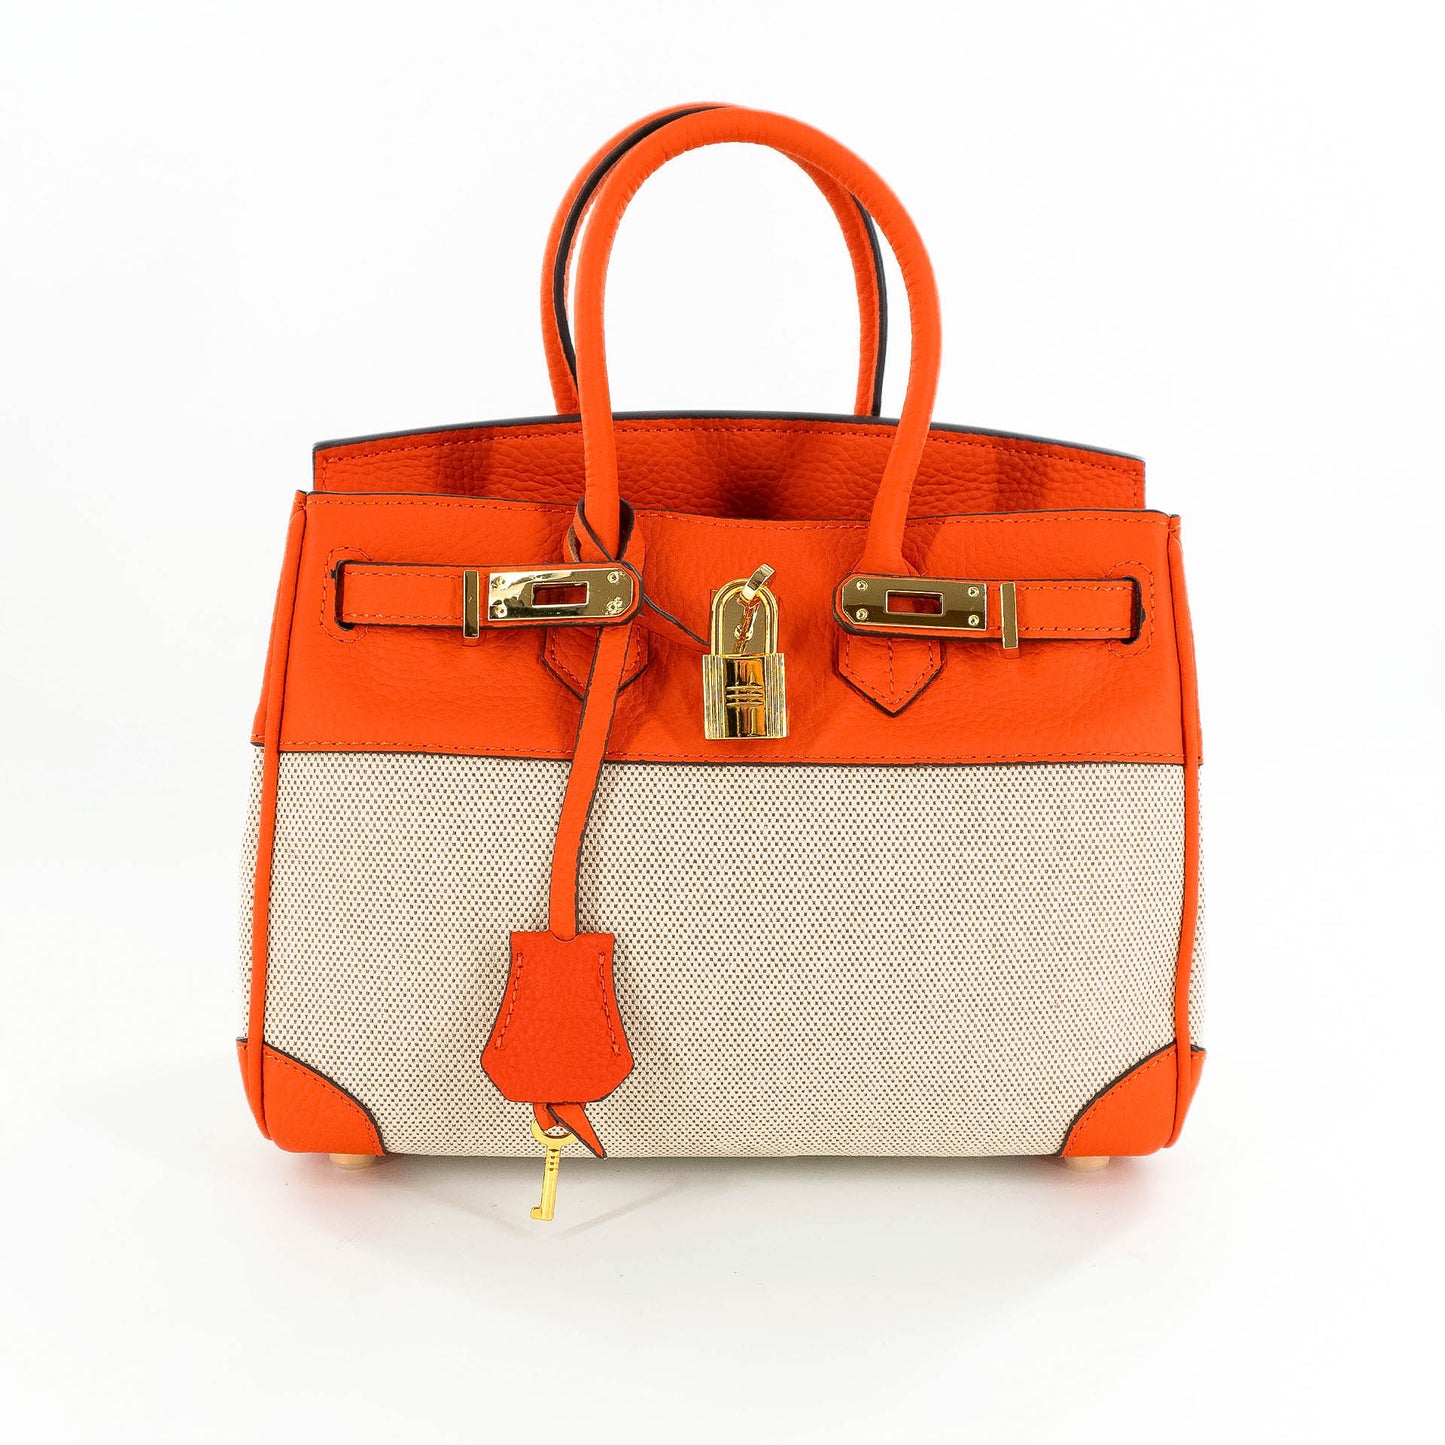 Duchess Handbag in Canvas and Orange Leather